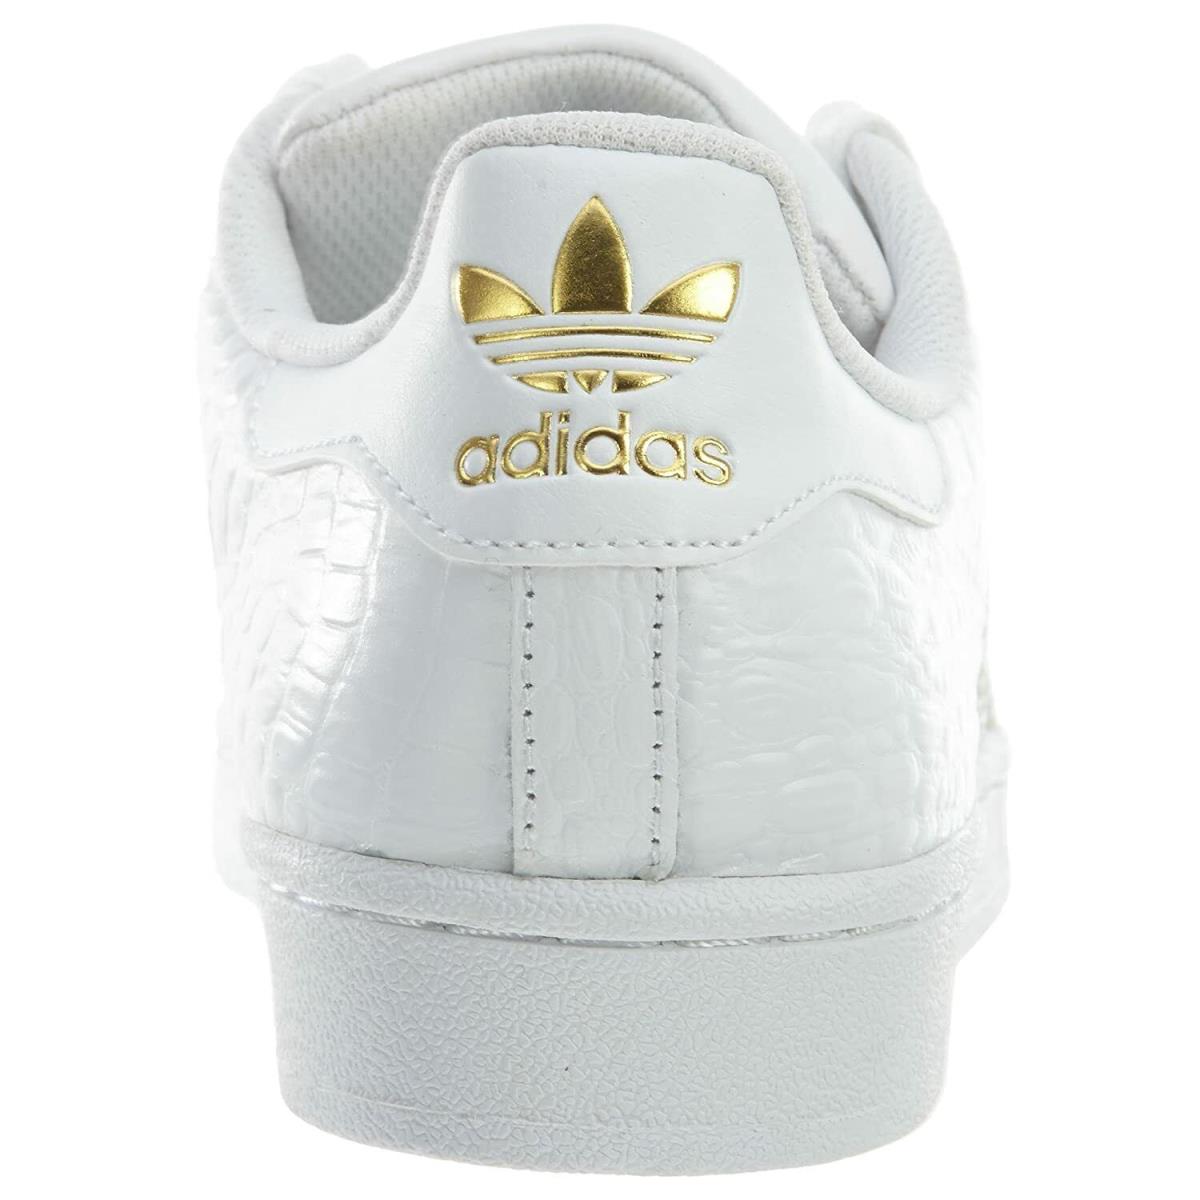 Adidas shoes Originals Superstar Croc - White 4